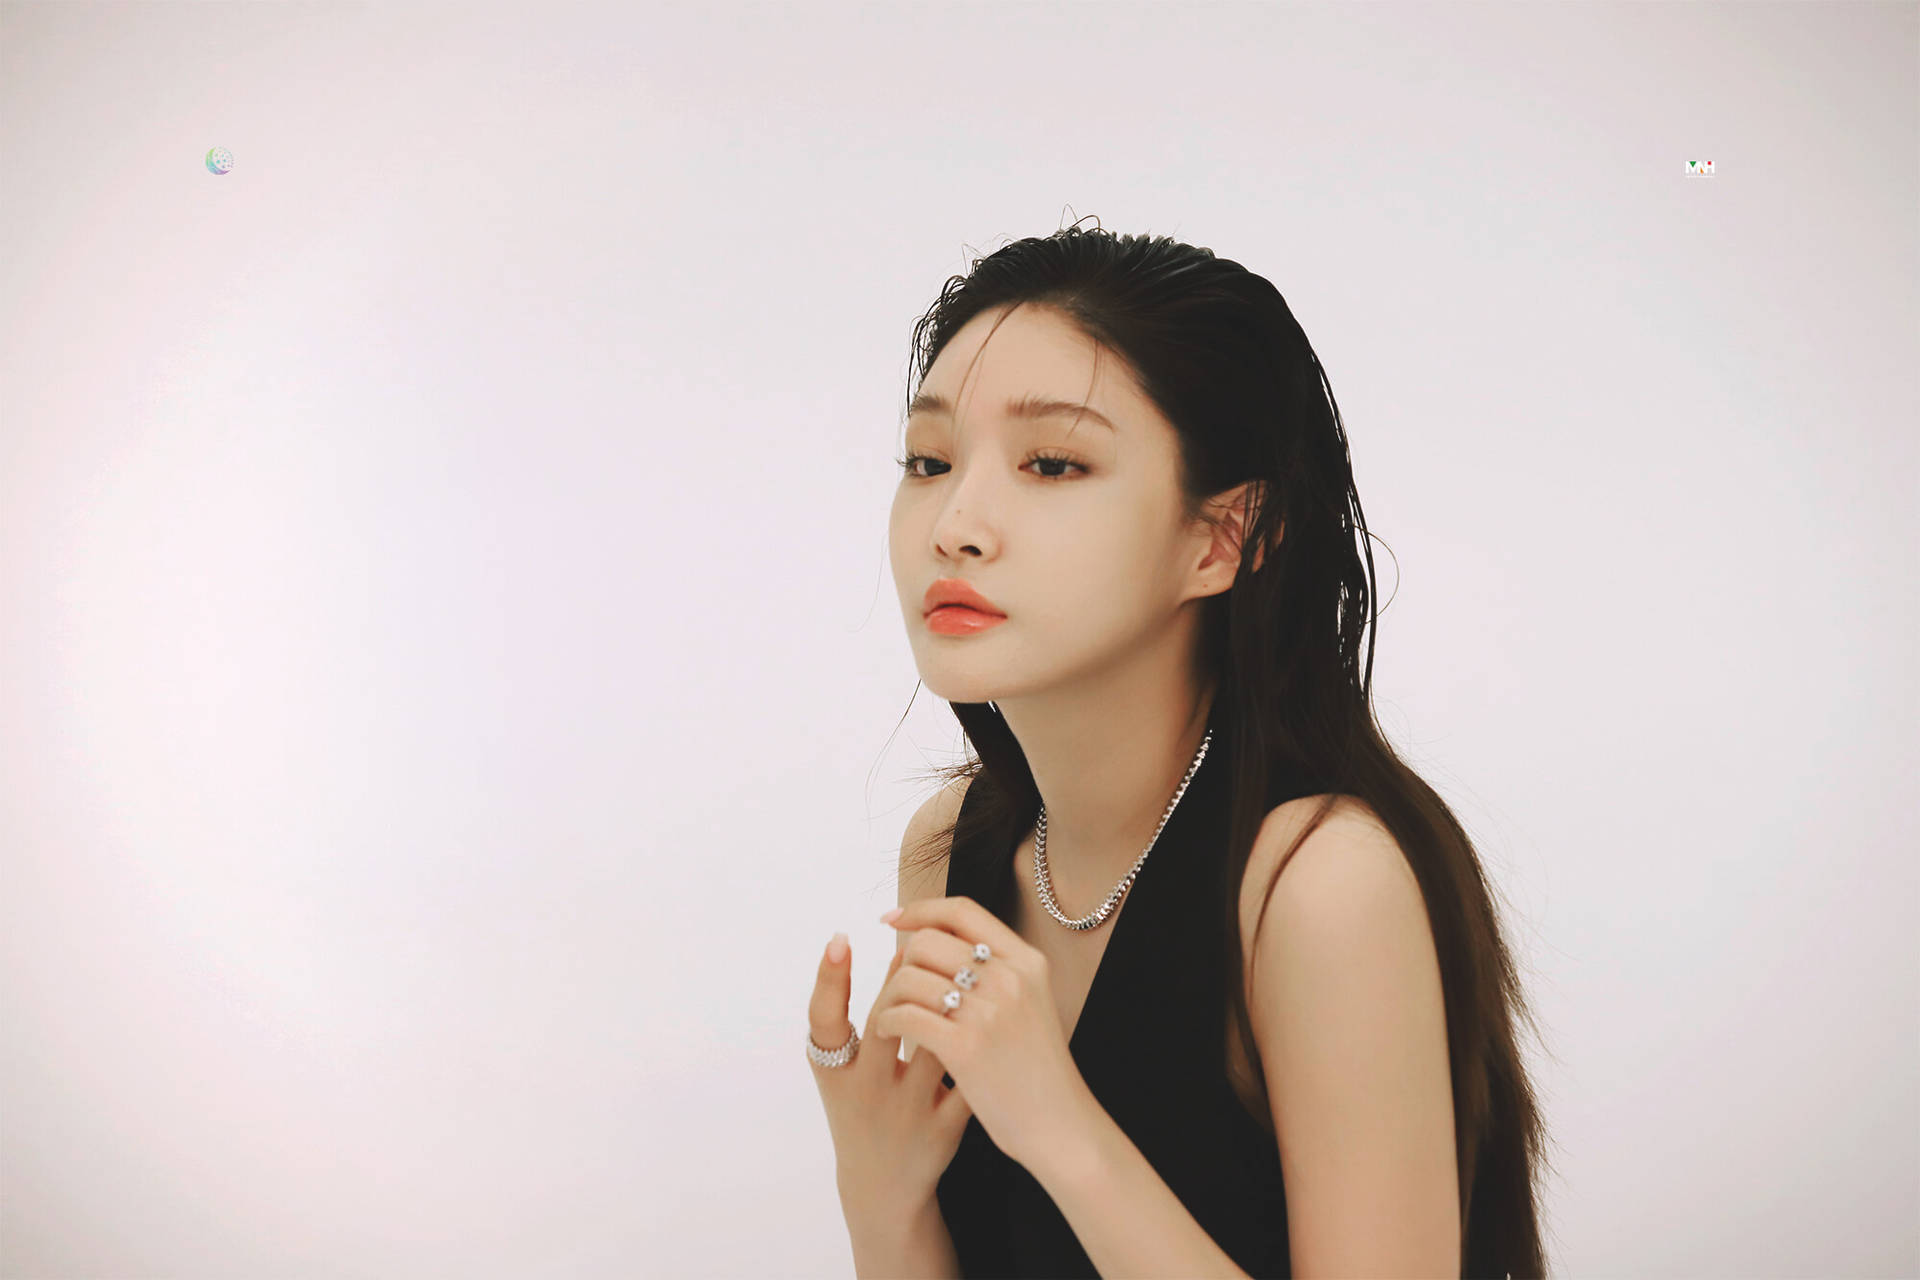 Singer Chungha Photoshoot